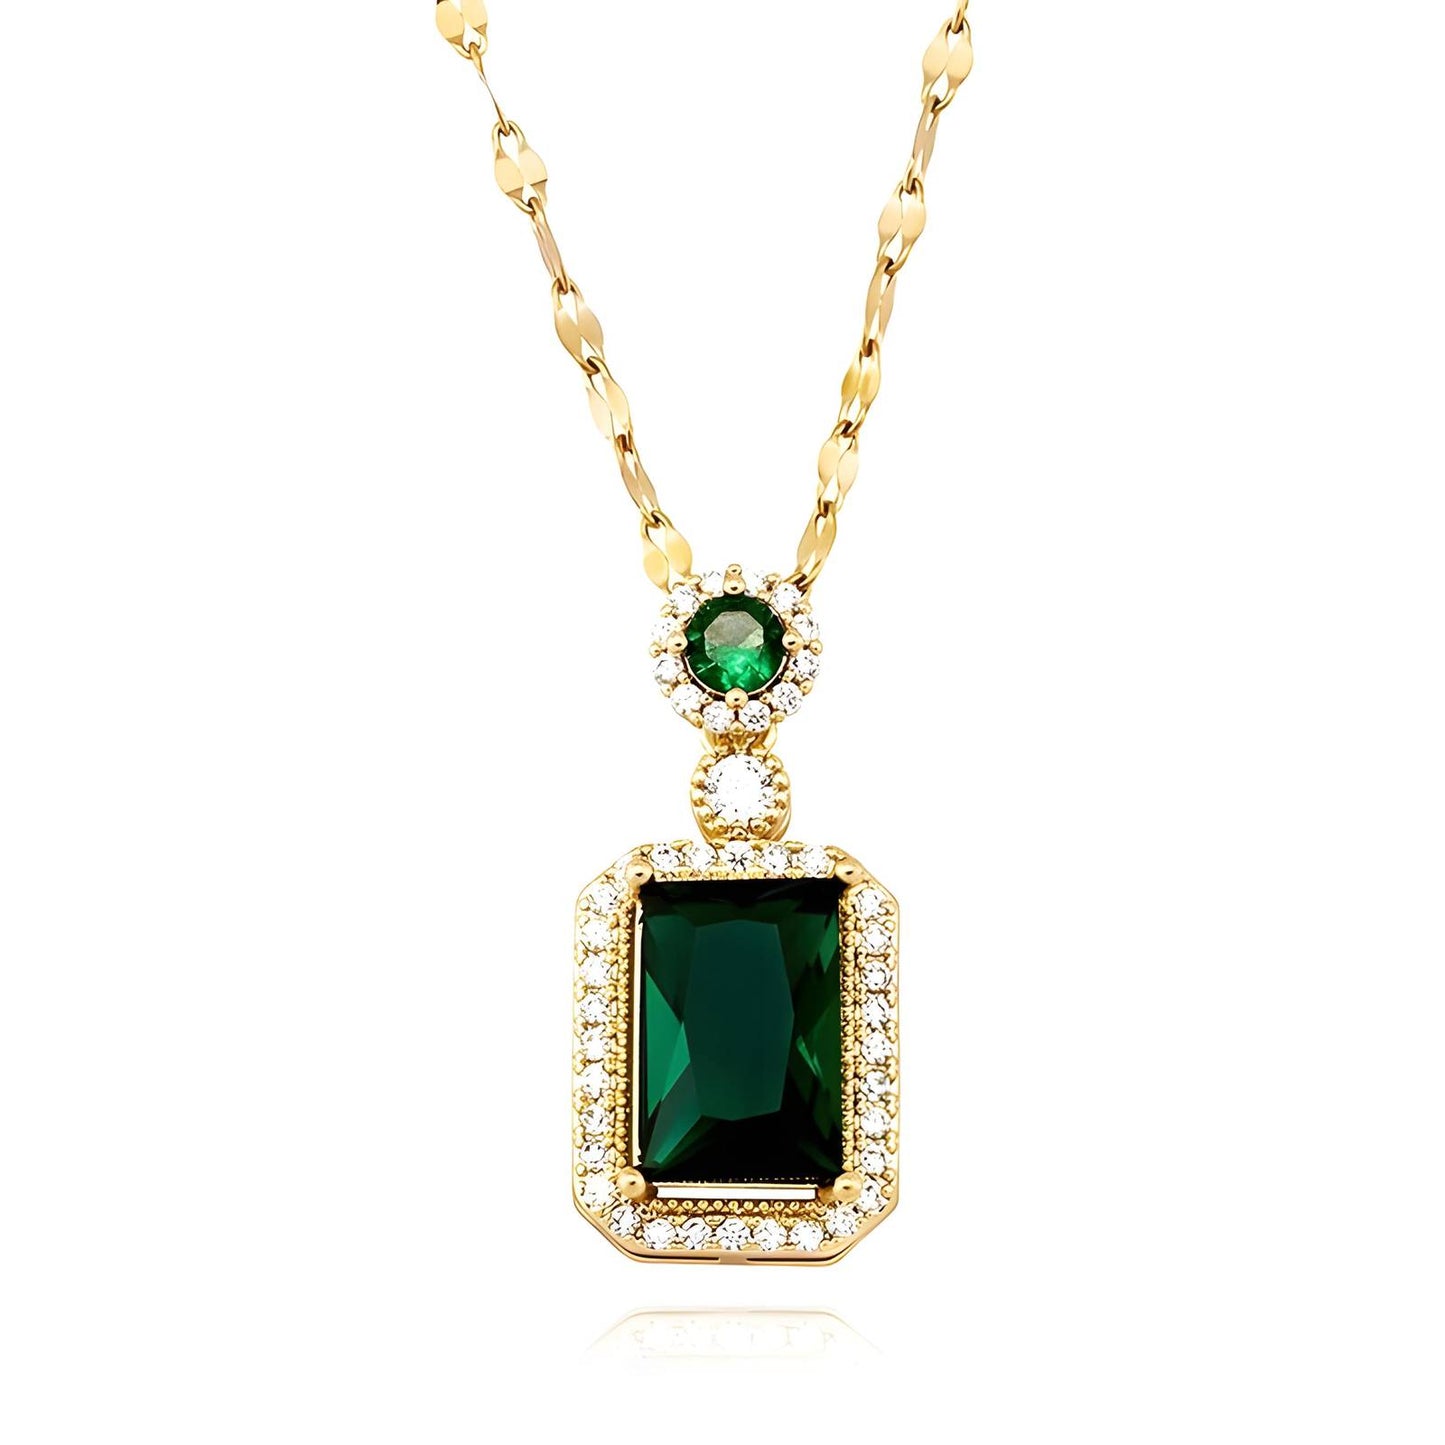 Graceful Elegance: Classy Green Gemstone Pendant on Fine Gold Necklace